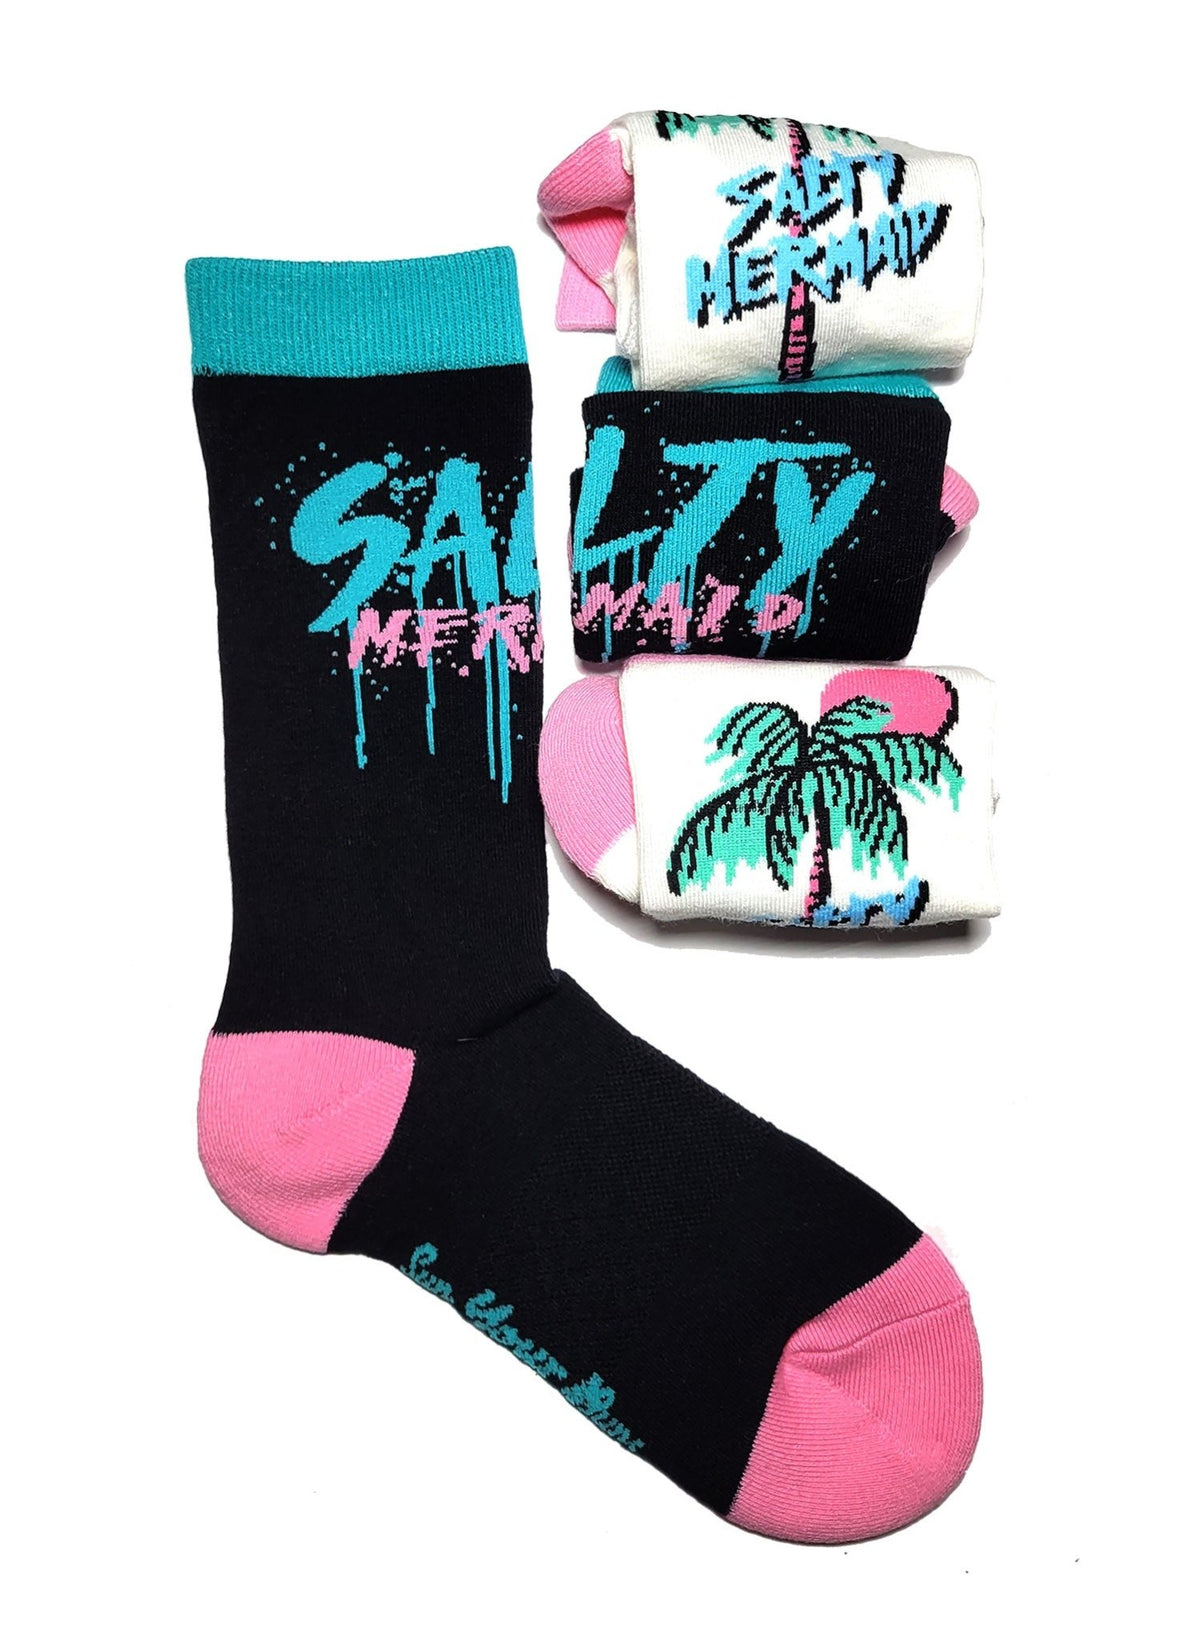 Salty Crew Socks - White/Pink